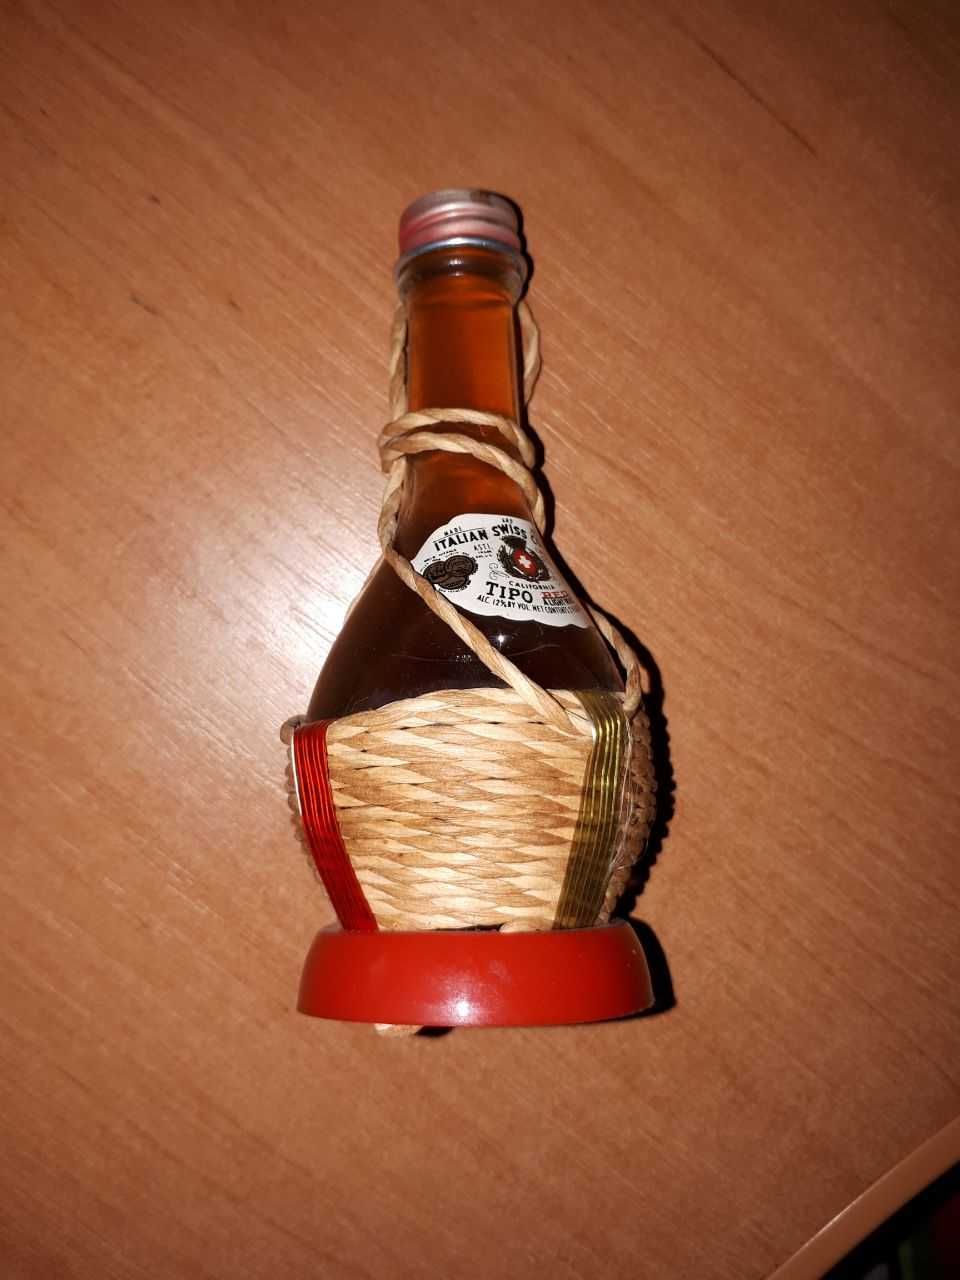 Tipo Italiano Swiss Colony Bottle